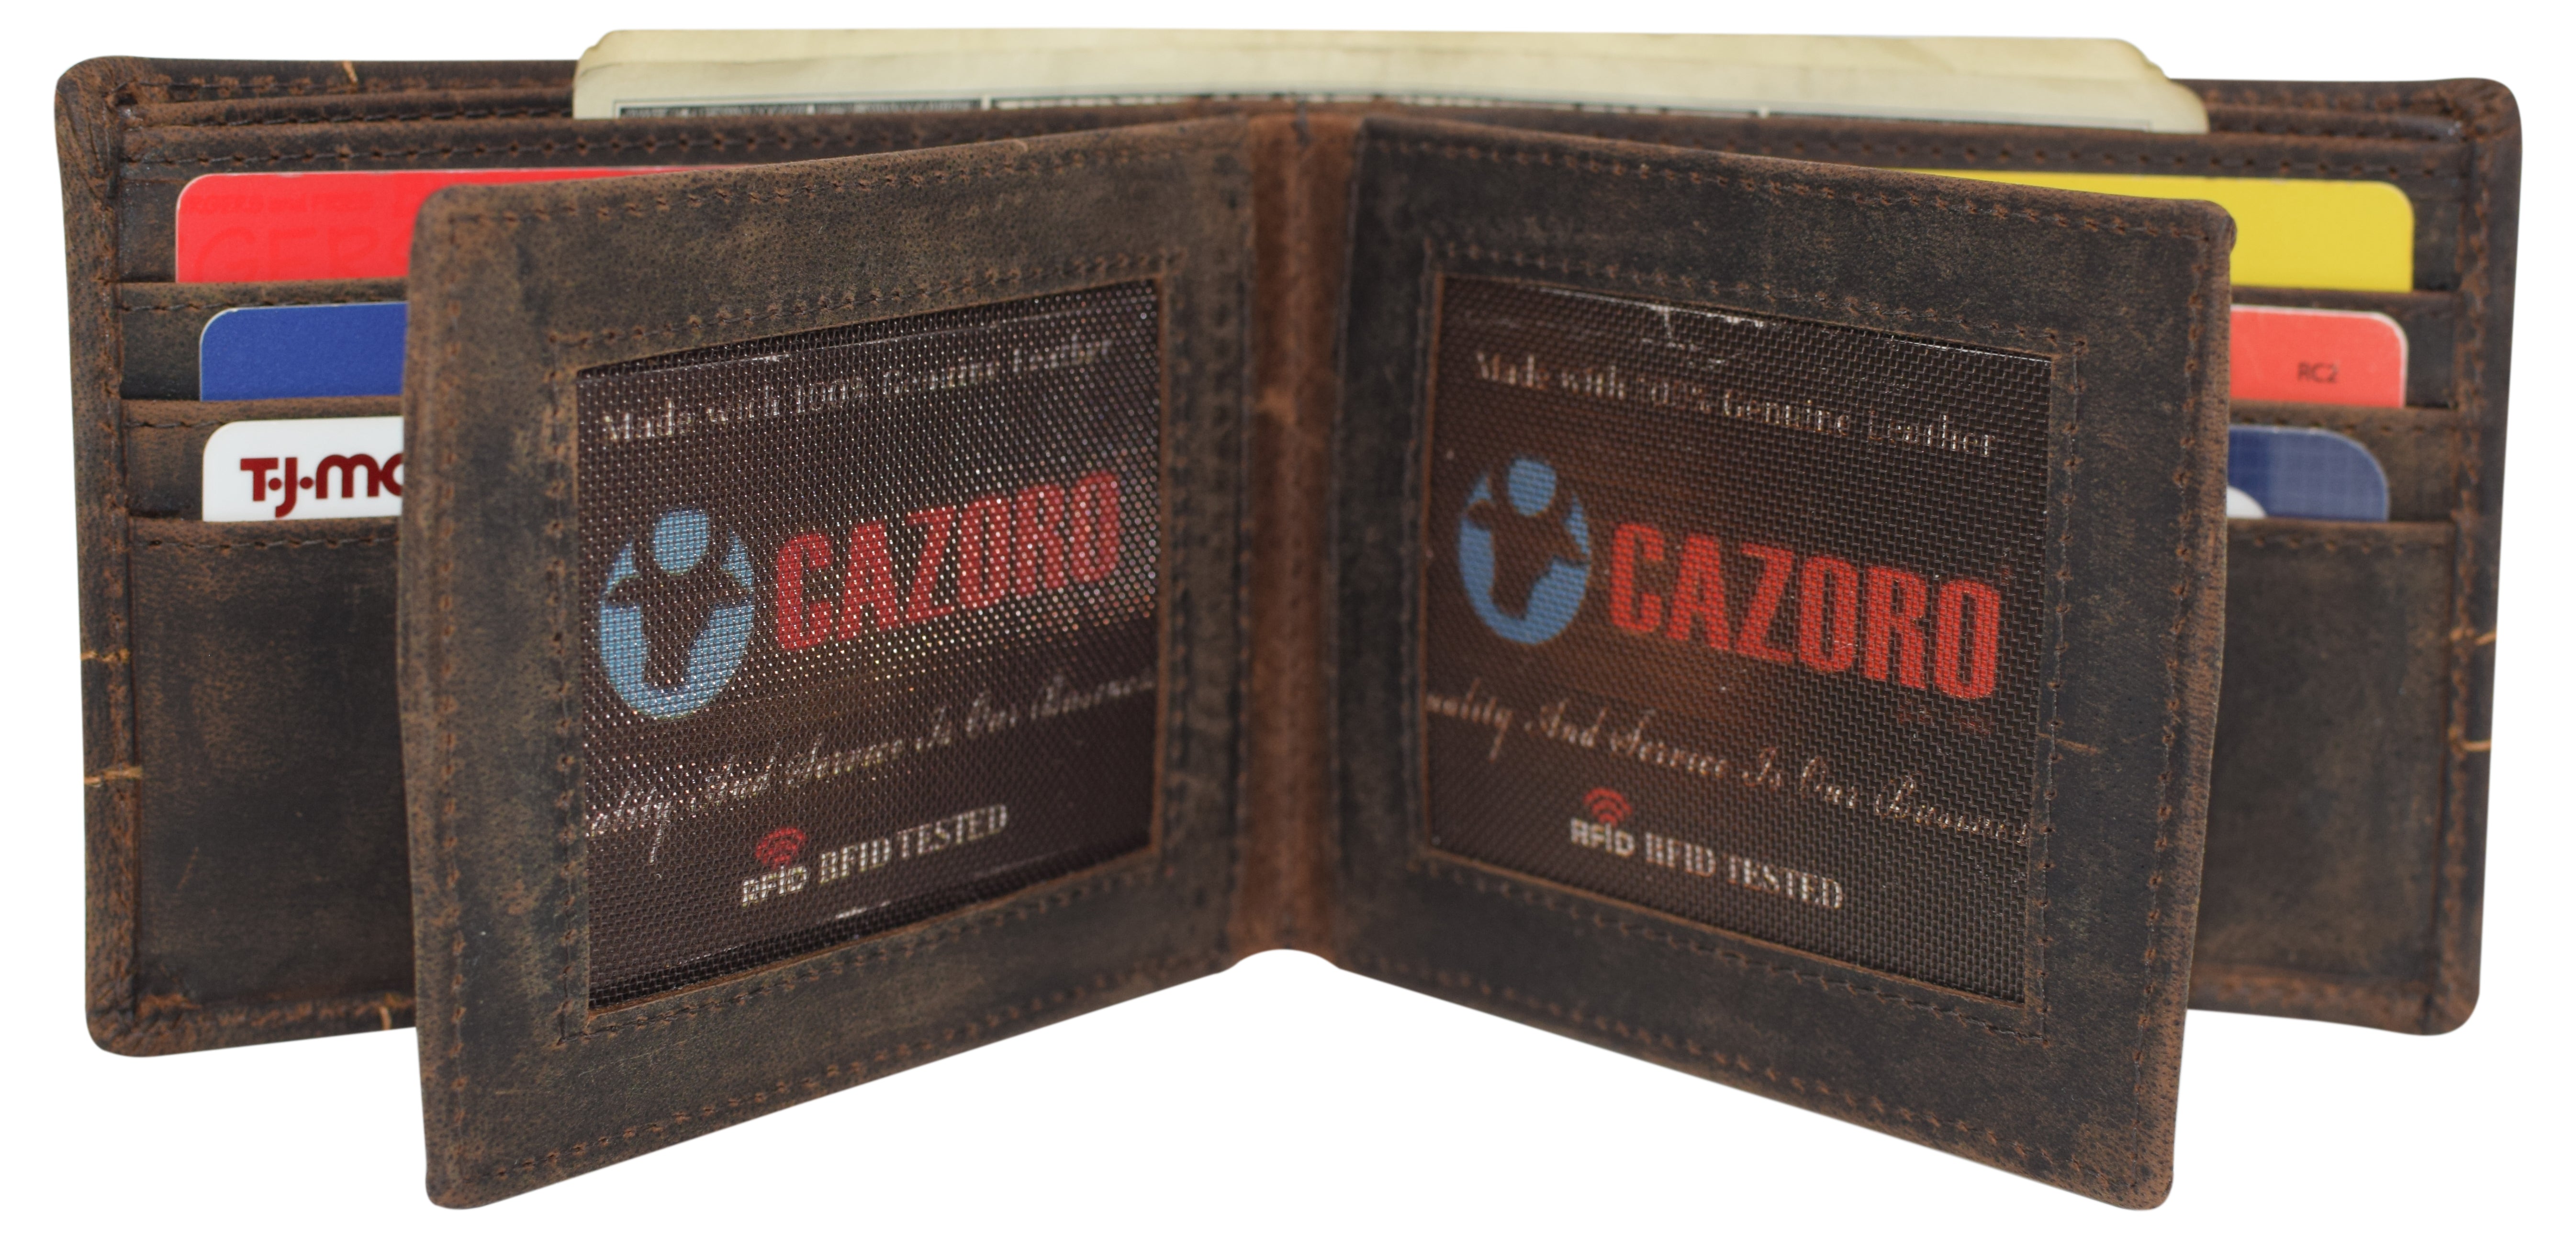 CAZORO Wallets For Men RFID Blocking Vintage Leather Large Bifold ...